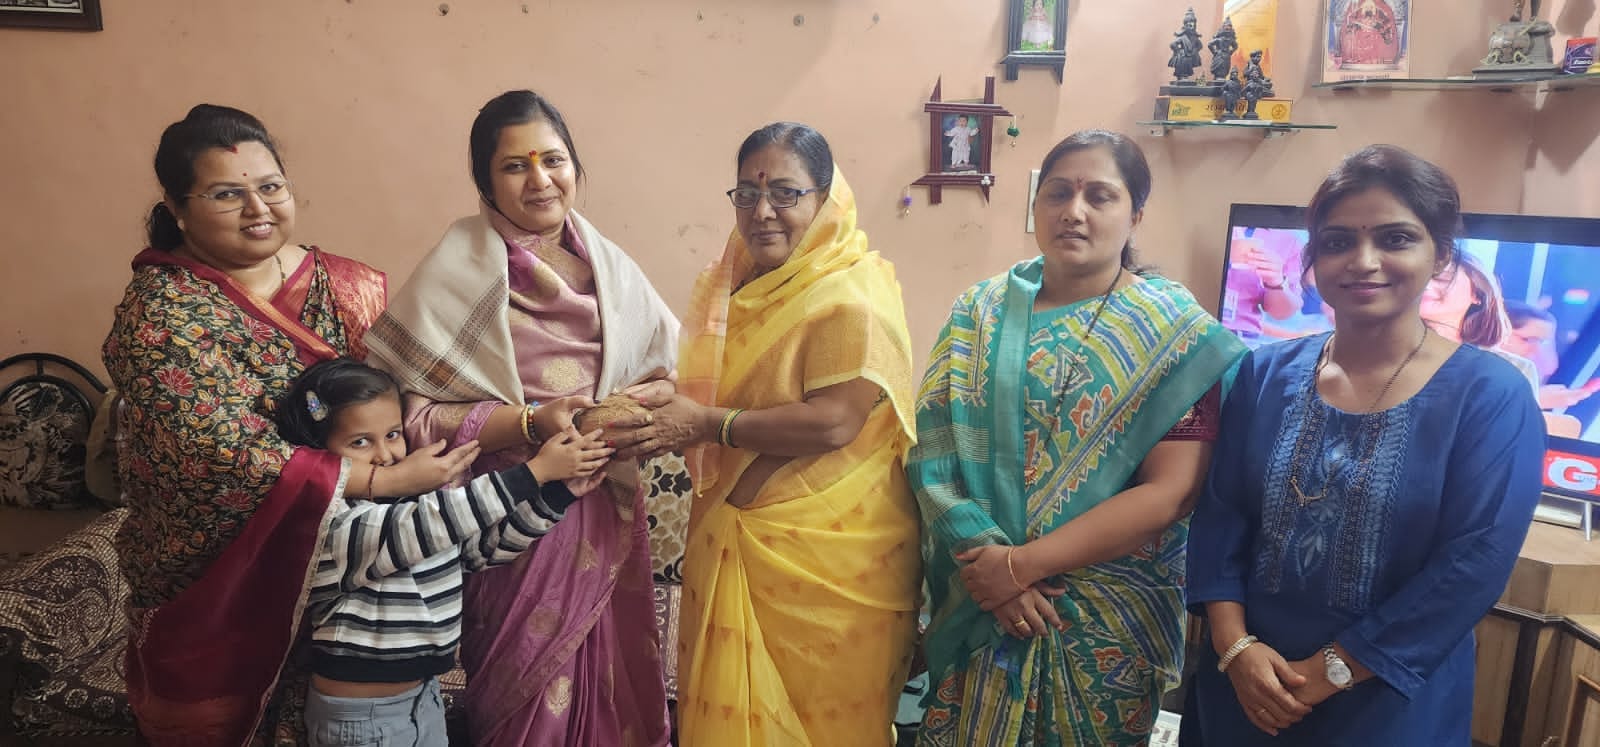 Shitladevi Mohite Patil visited the residence of Salunkhe in Karmala